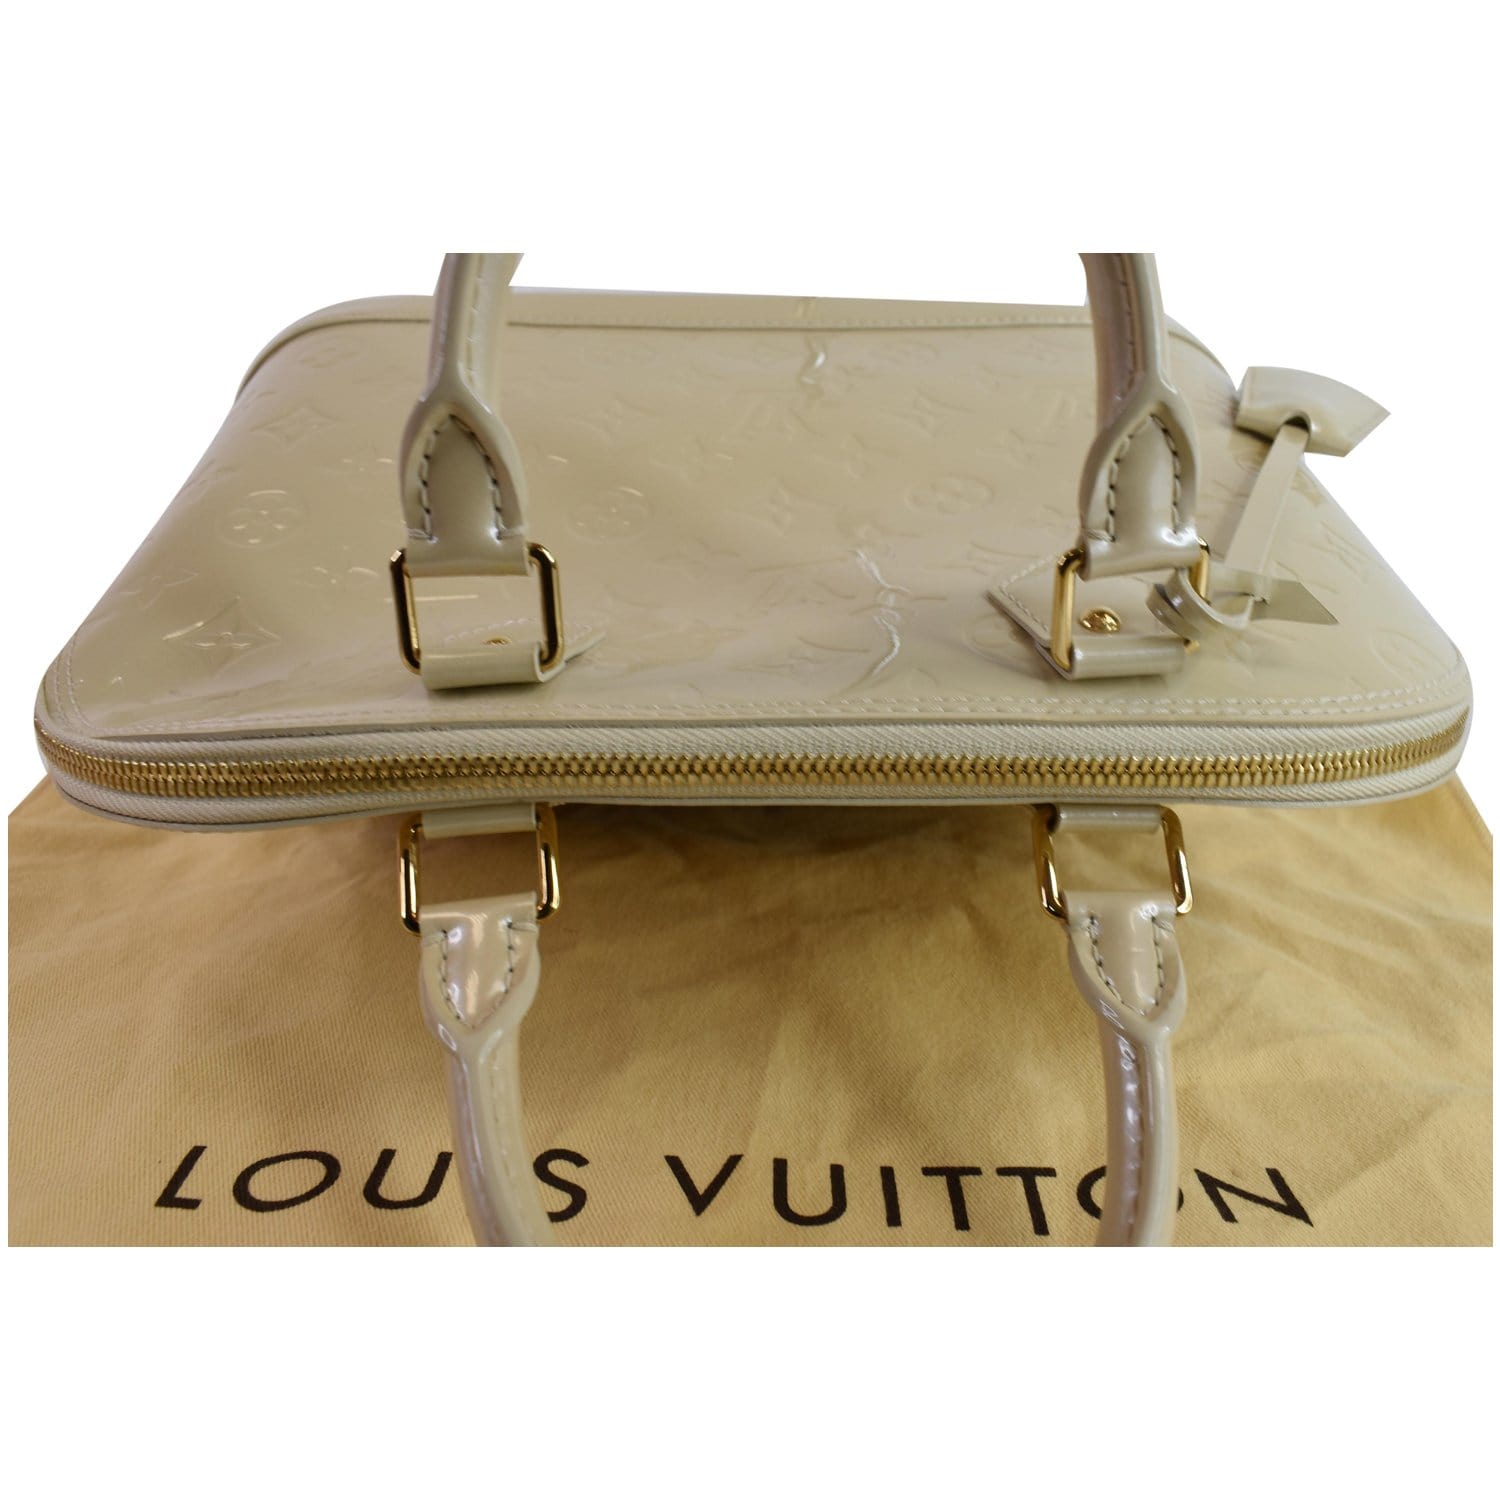 Louis Vuitton Beige Monogram Vernis Alma PM Bag Louis Vuitton